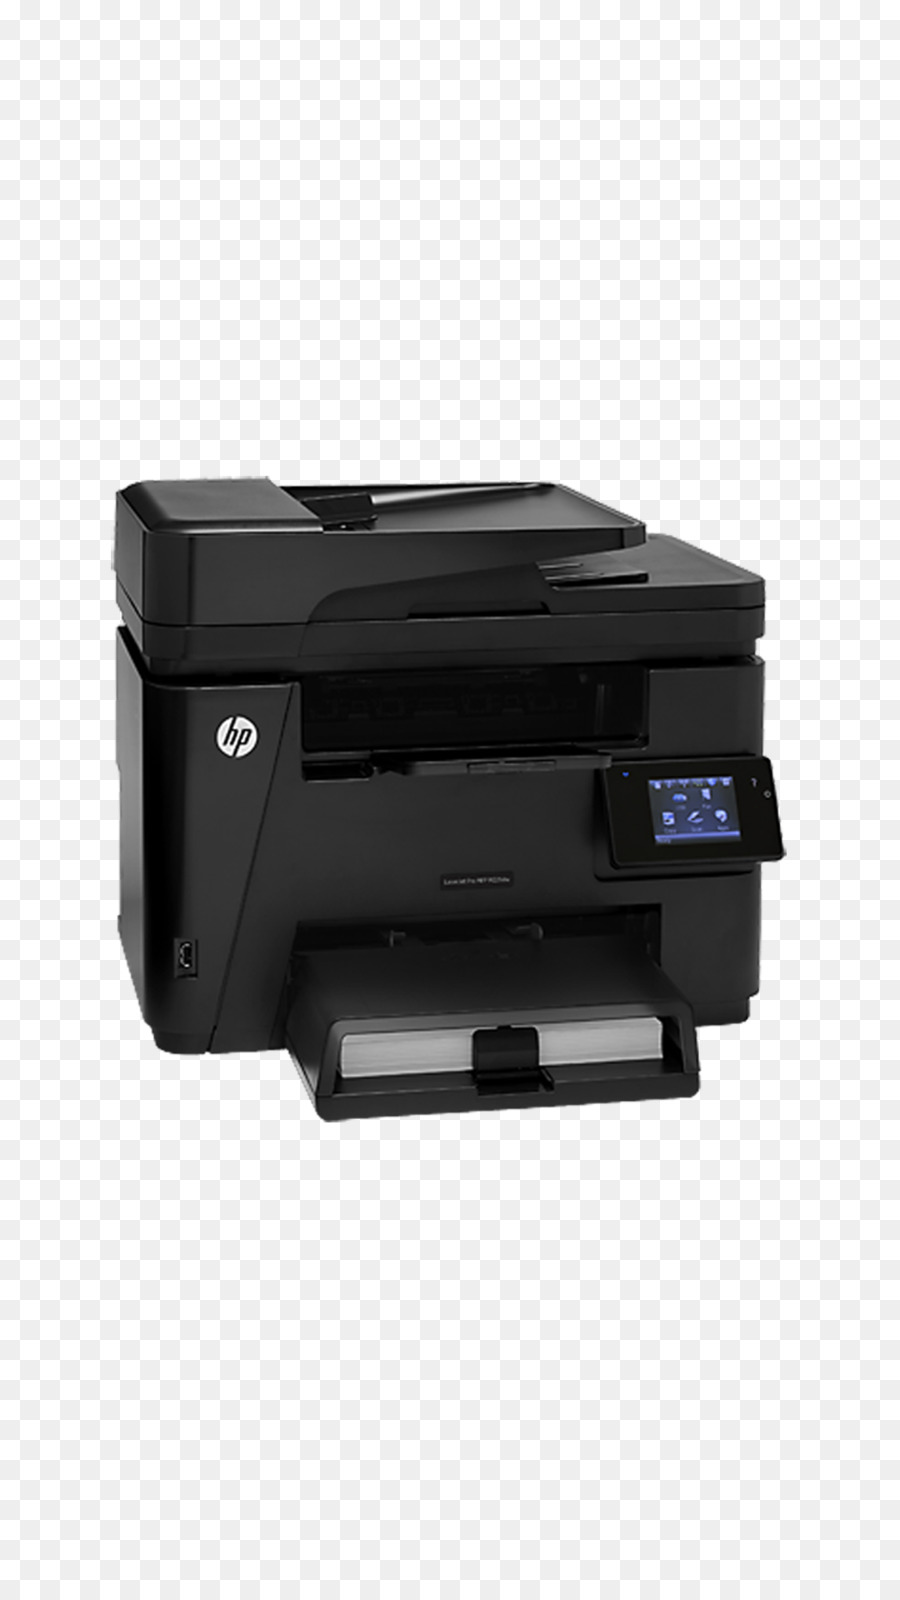 Hp Laserjet Pro M225 Printer